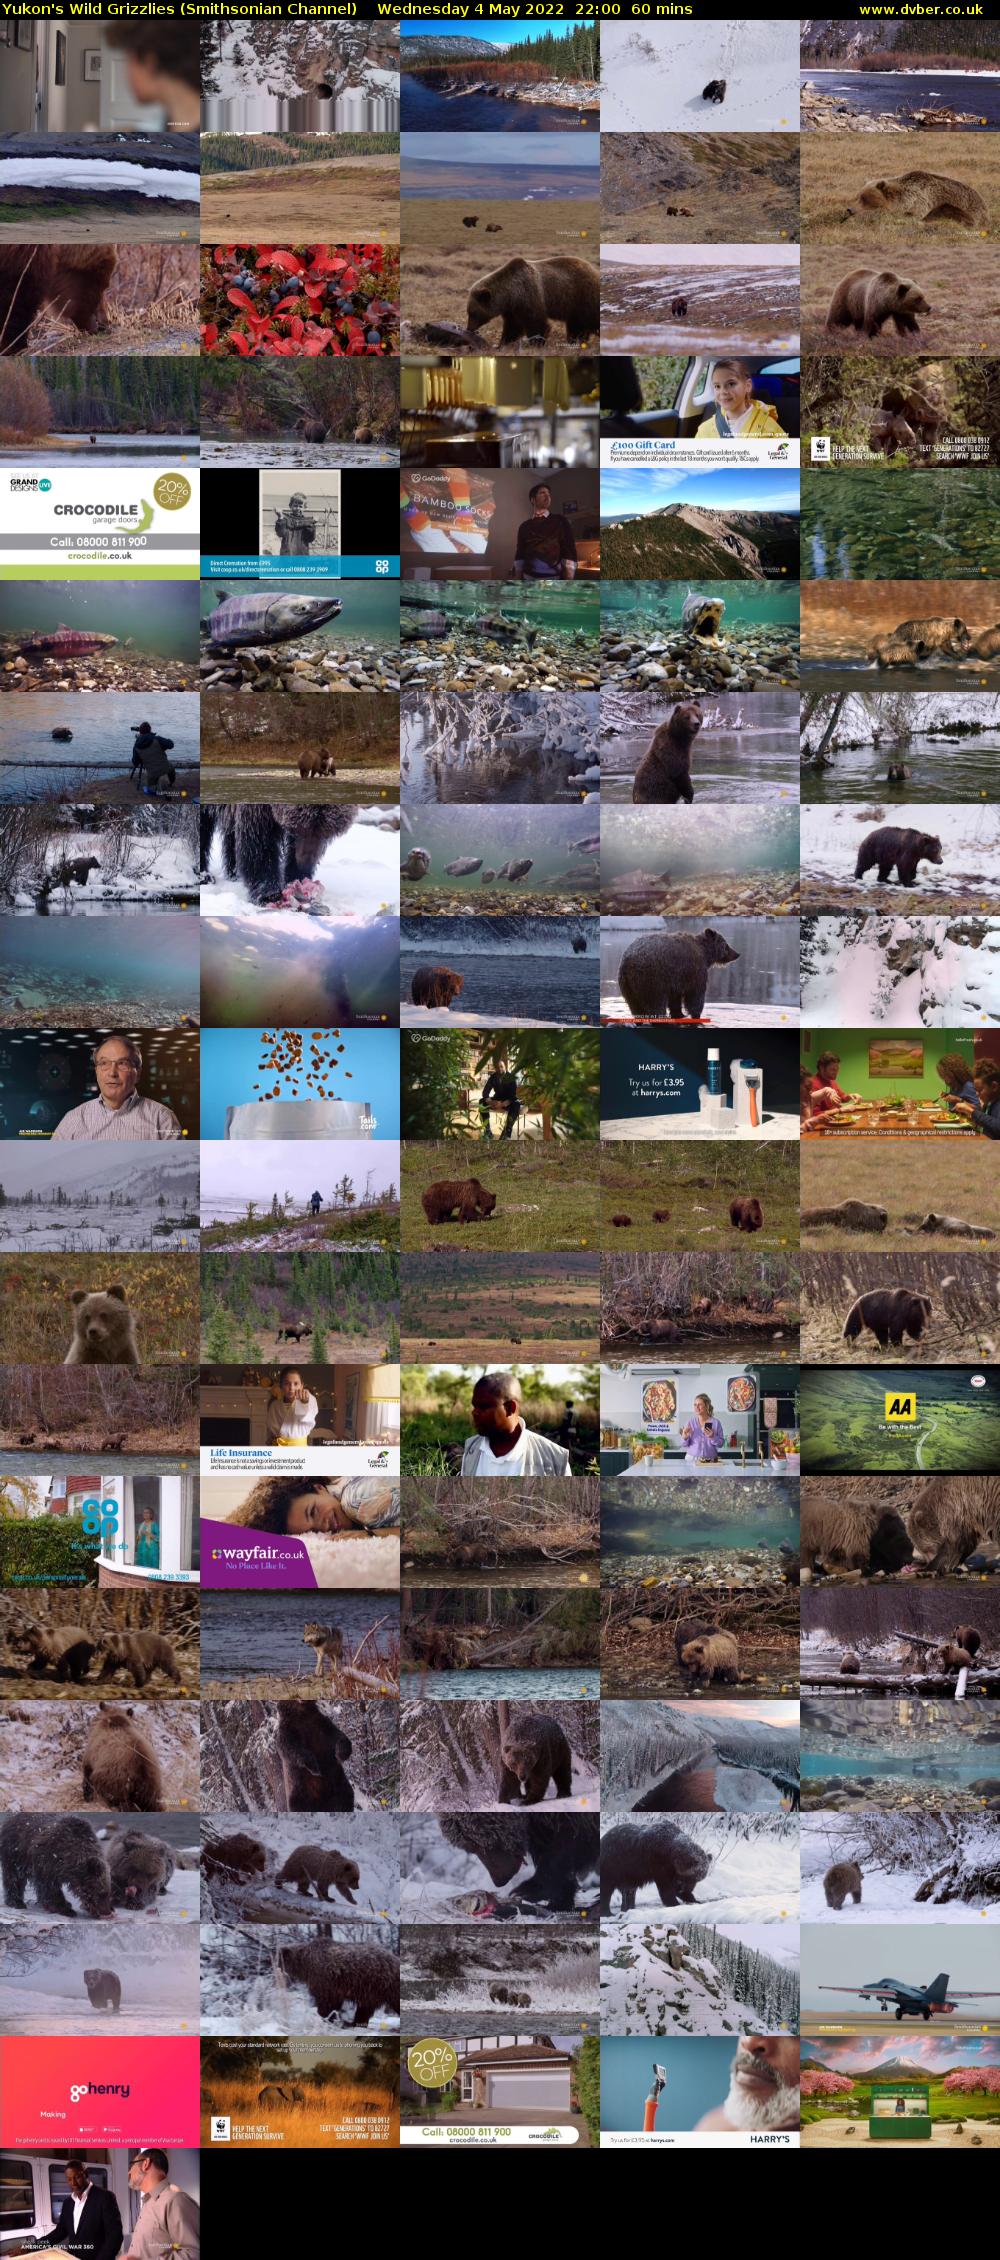 Yukon's Wild Grizzlies (Smithsonian Channel) Wednesday 4 May 2022 22:00 - 23:00